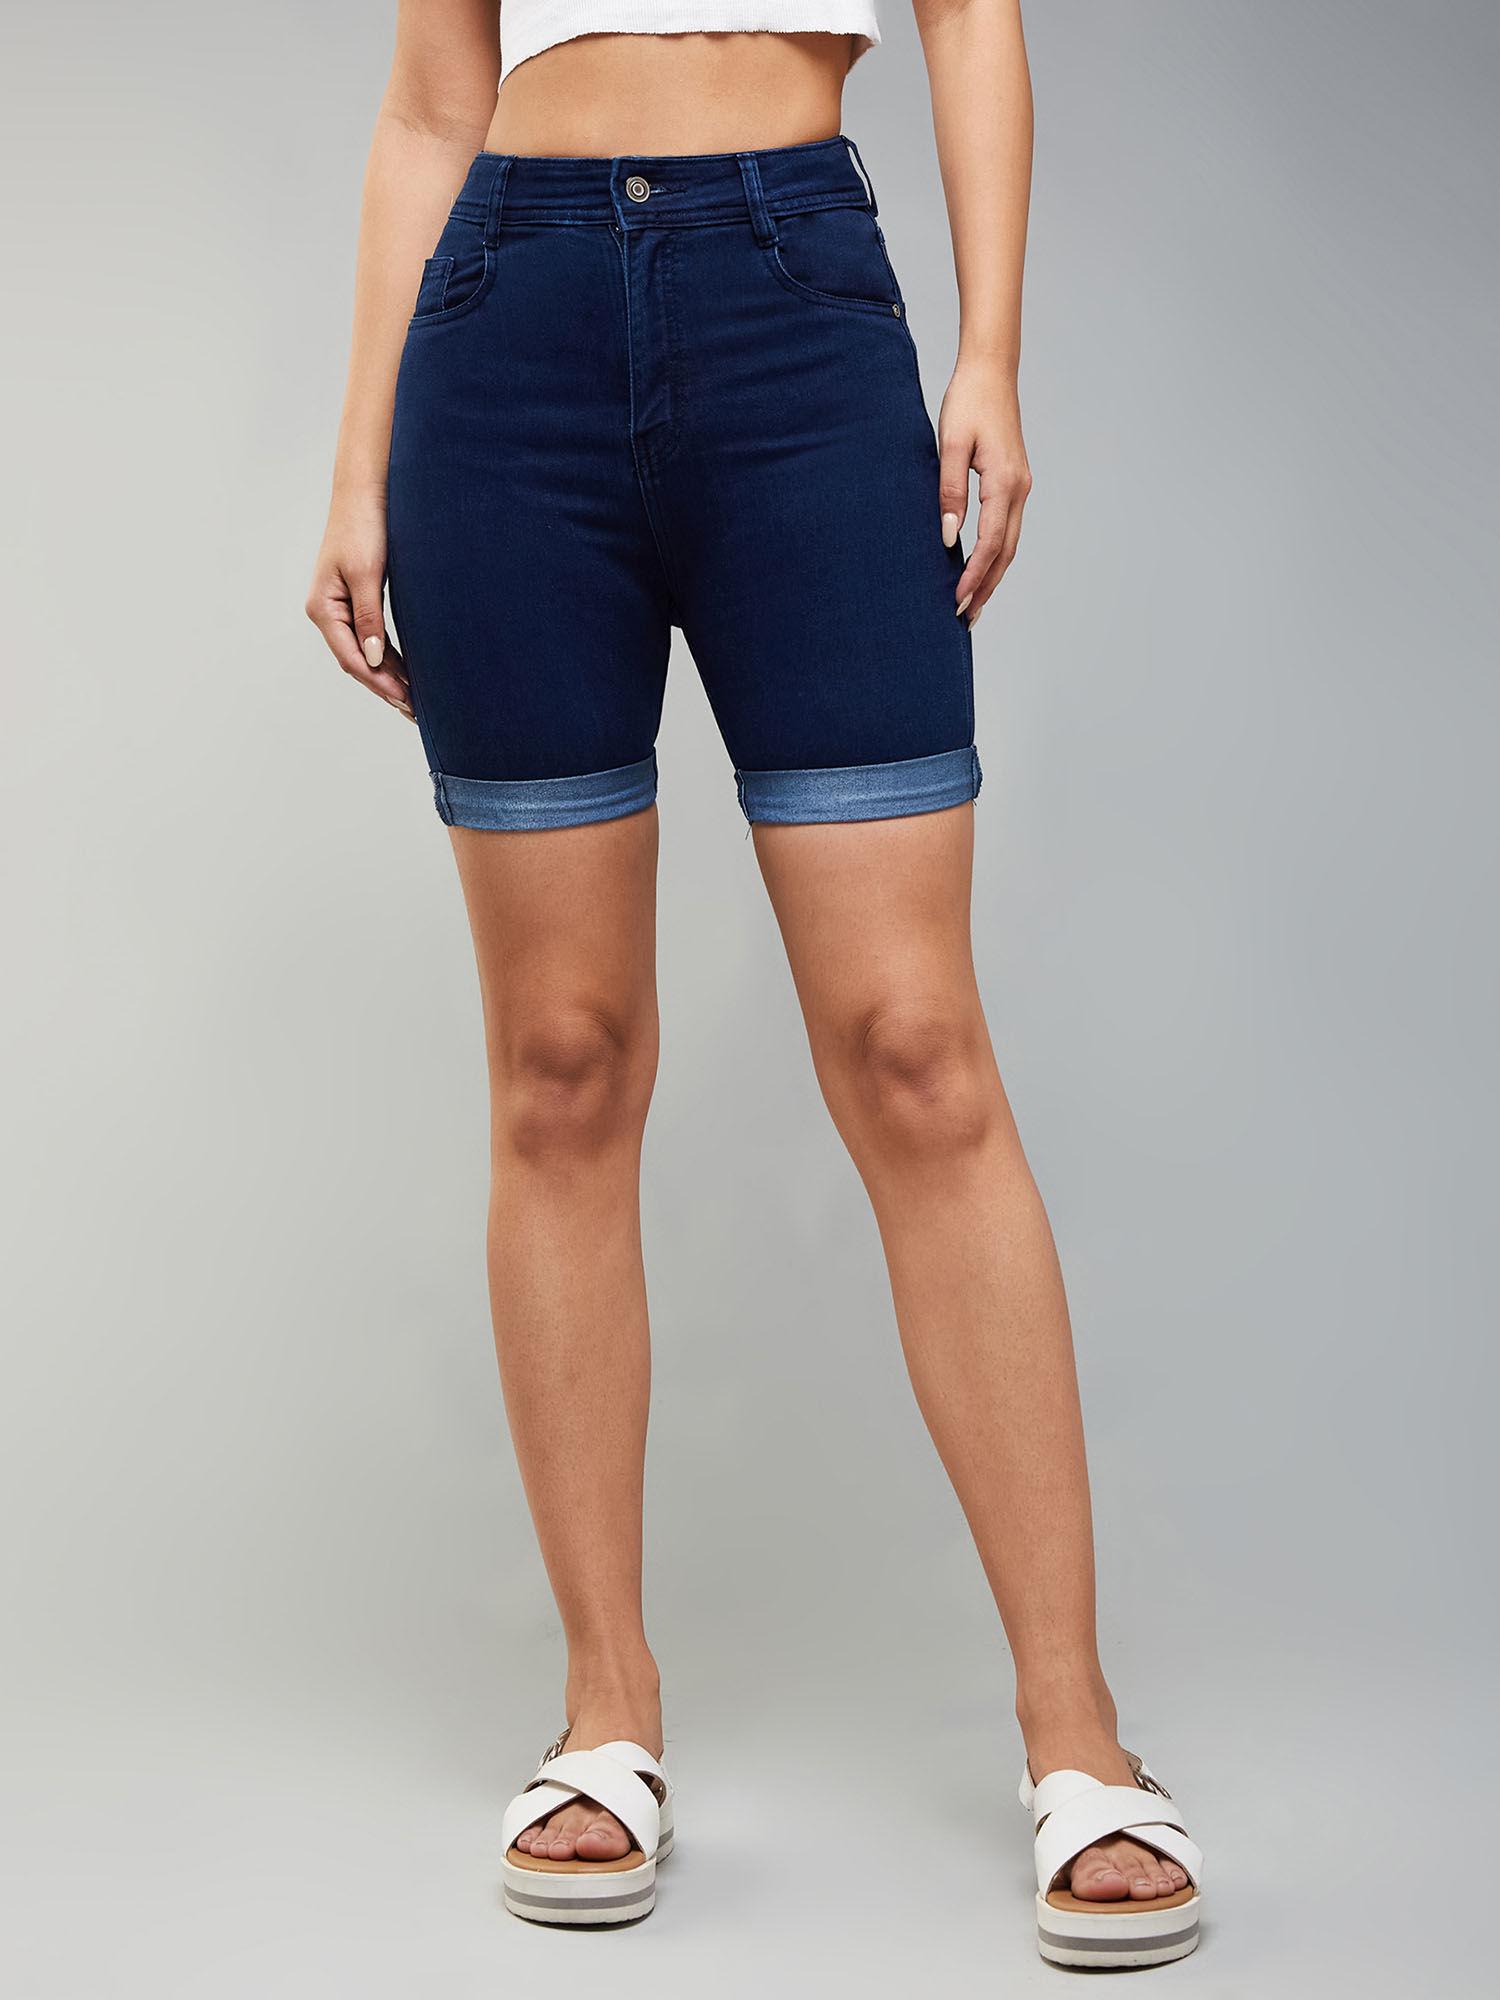 womens navy blue skinny clean look regular length stretchable denim shorts